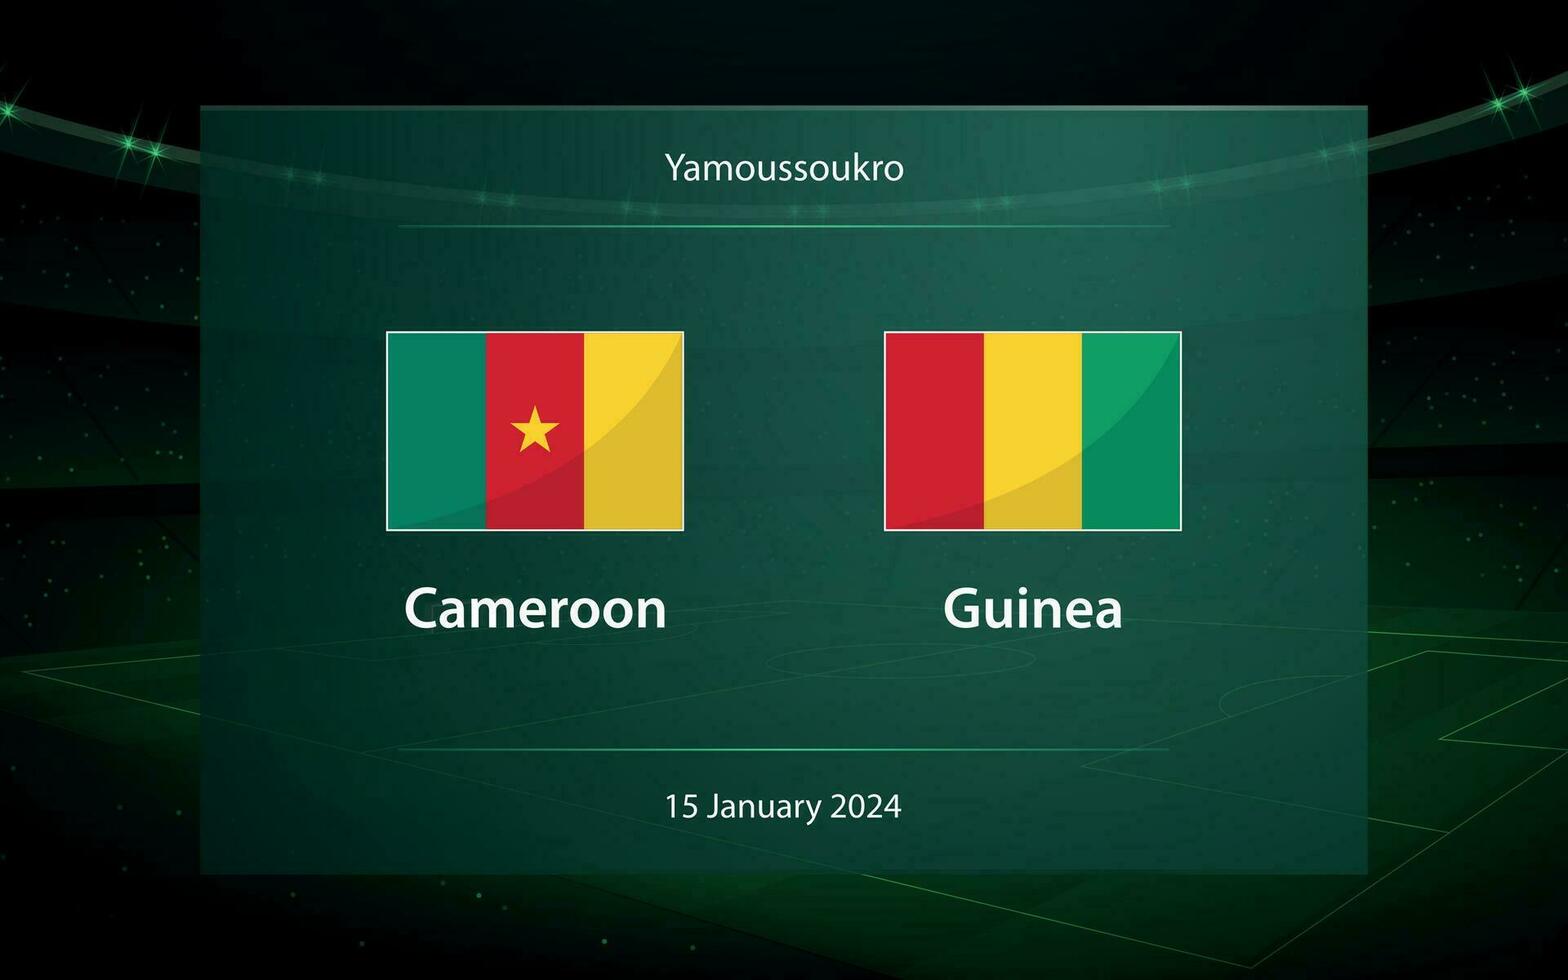 Cameroon vs Guinea. Football scoreboard broadcast graphic vector